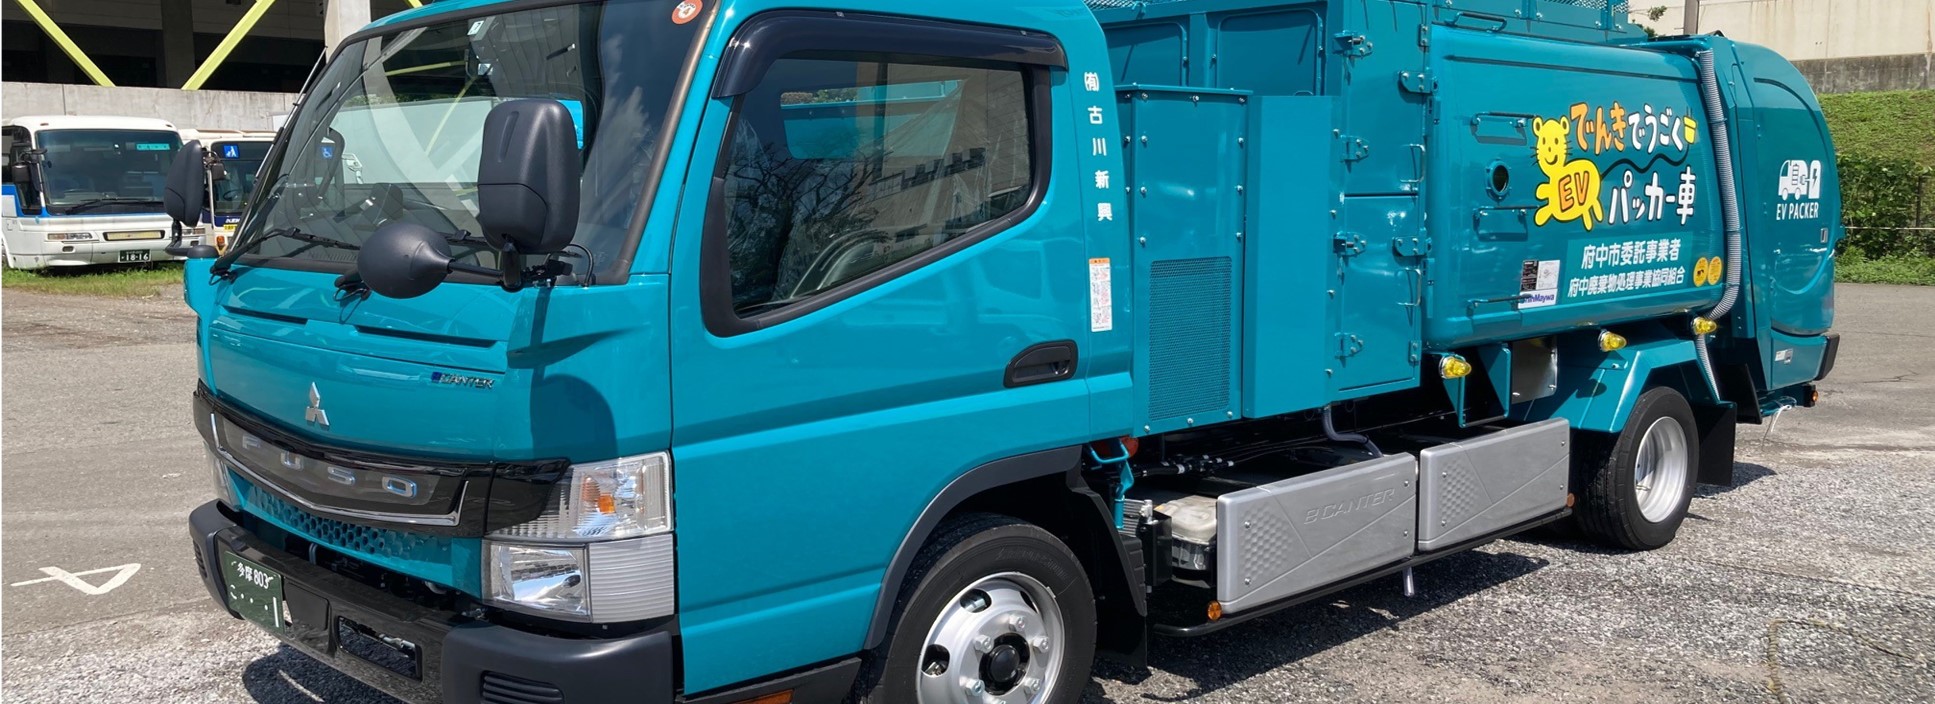 mftbc-delivered-the-second-ecanter-ev-garbage-truck-in-japan